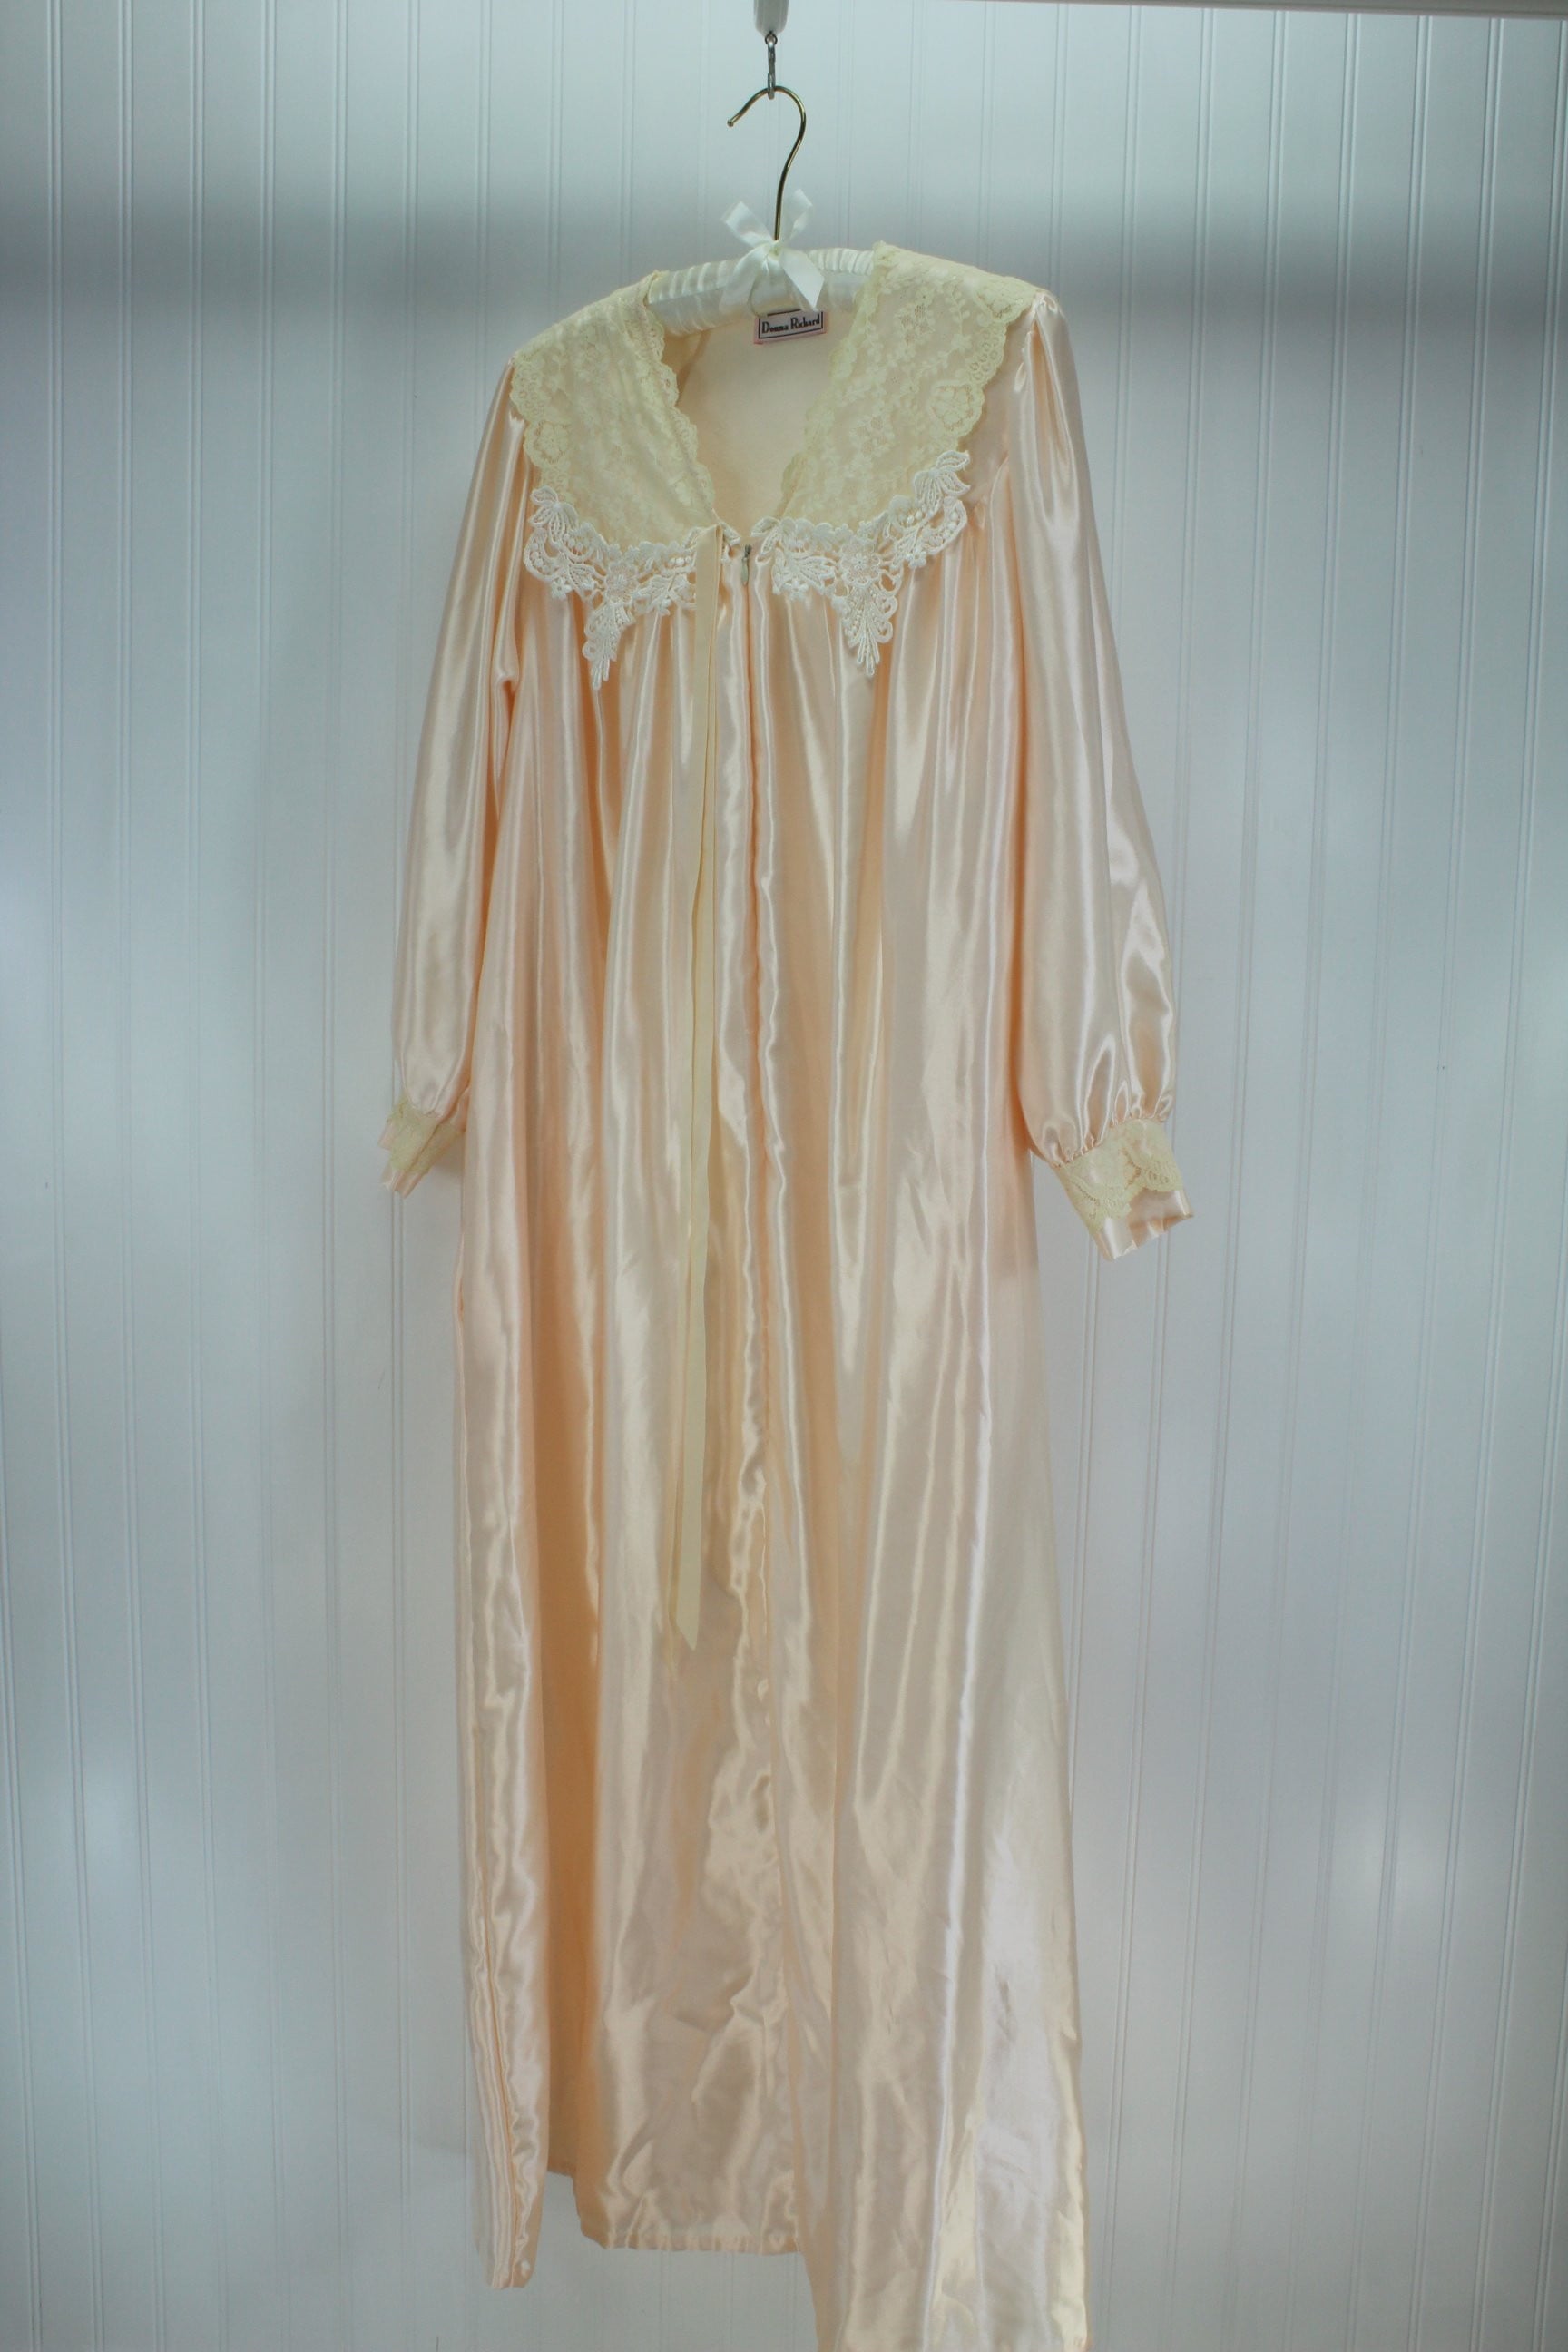 Donna Richard Nightgown Blush Pink Polyester Cotton Lace Collar Size Medium